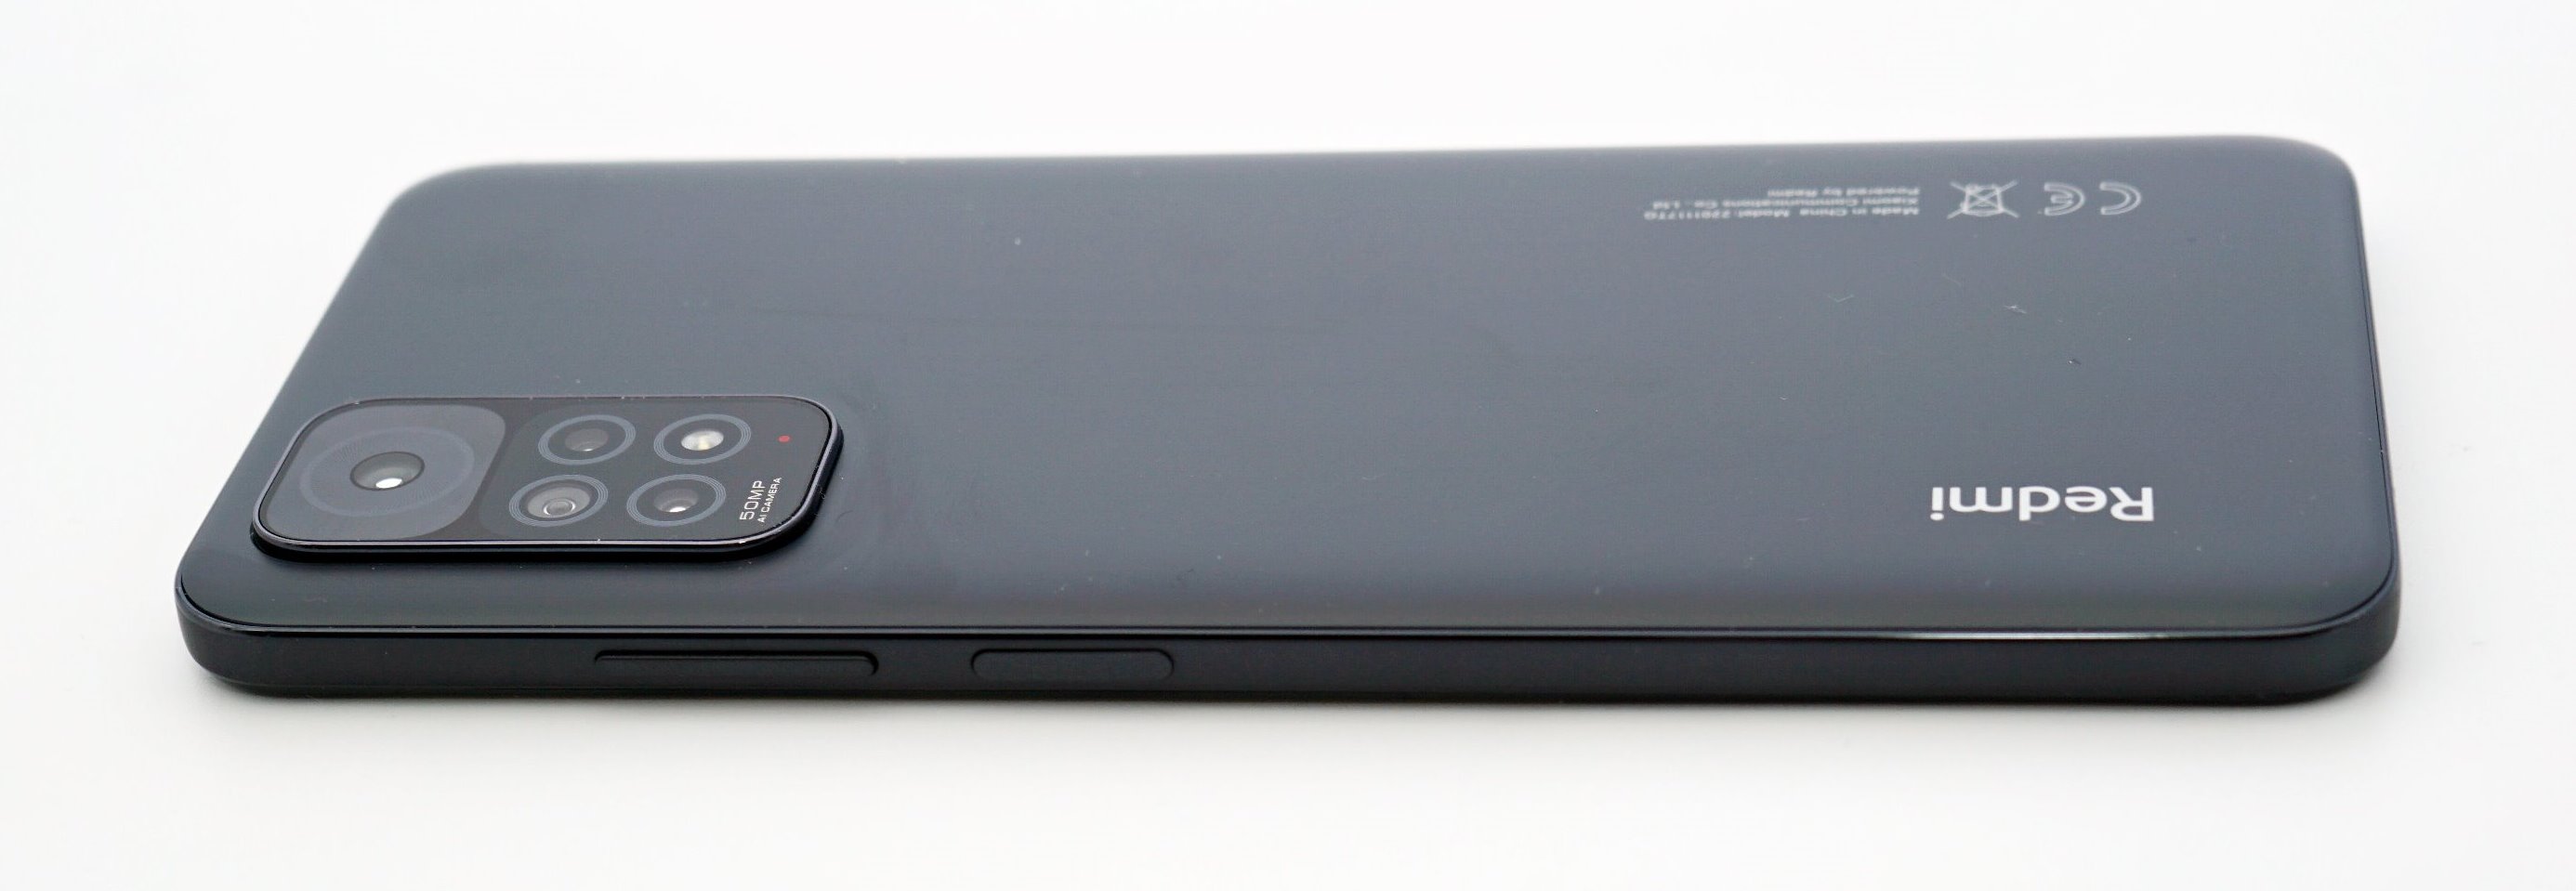 Note 11 4 128. Xiaomi Redmi Note 11 6/128gb Graphite Gray NFC надпись на коробке фото.